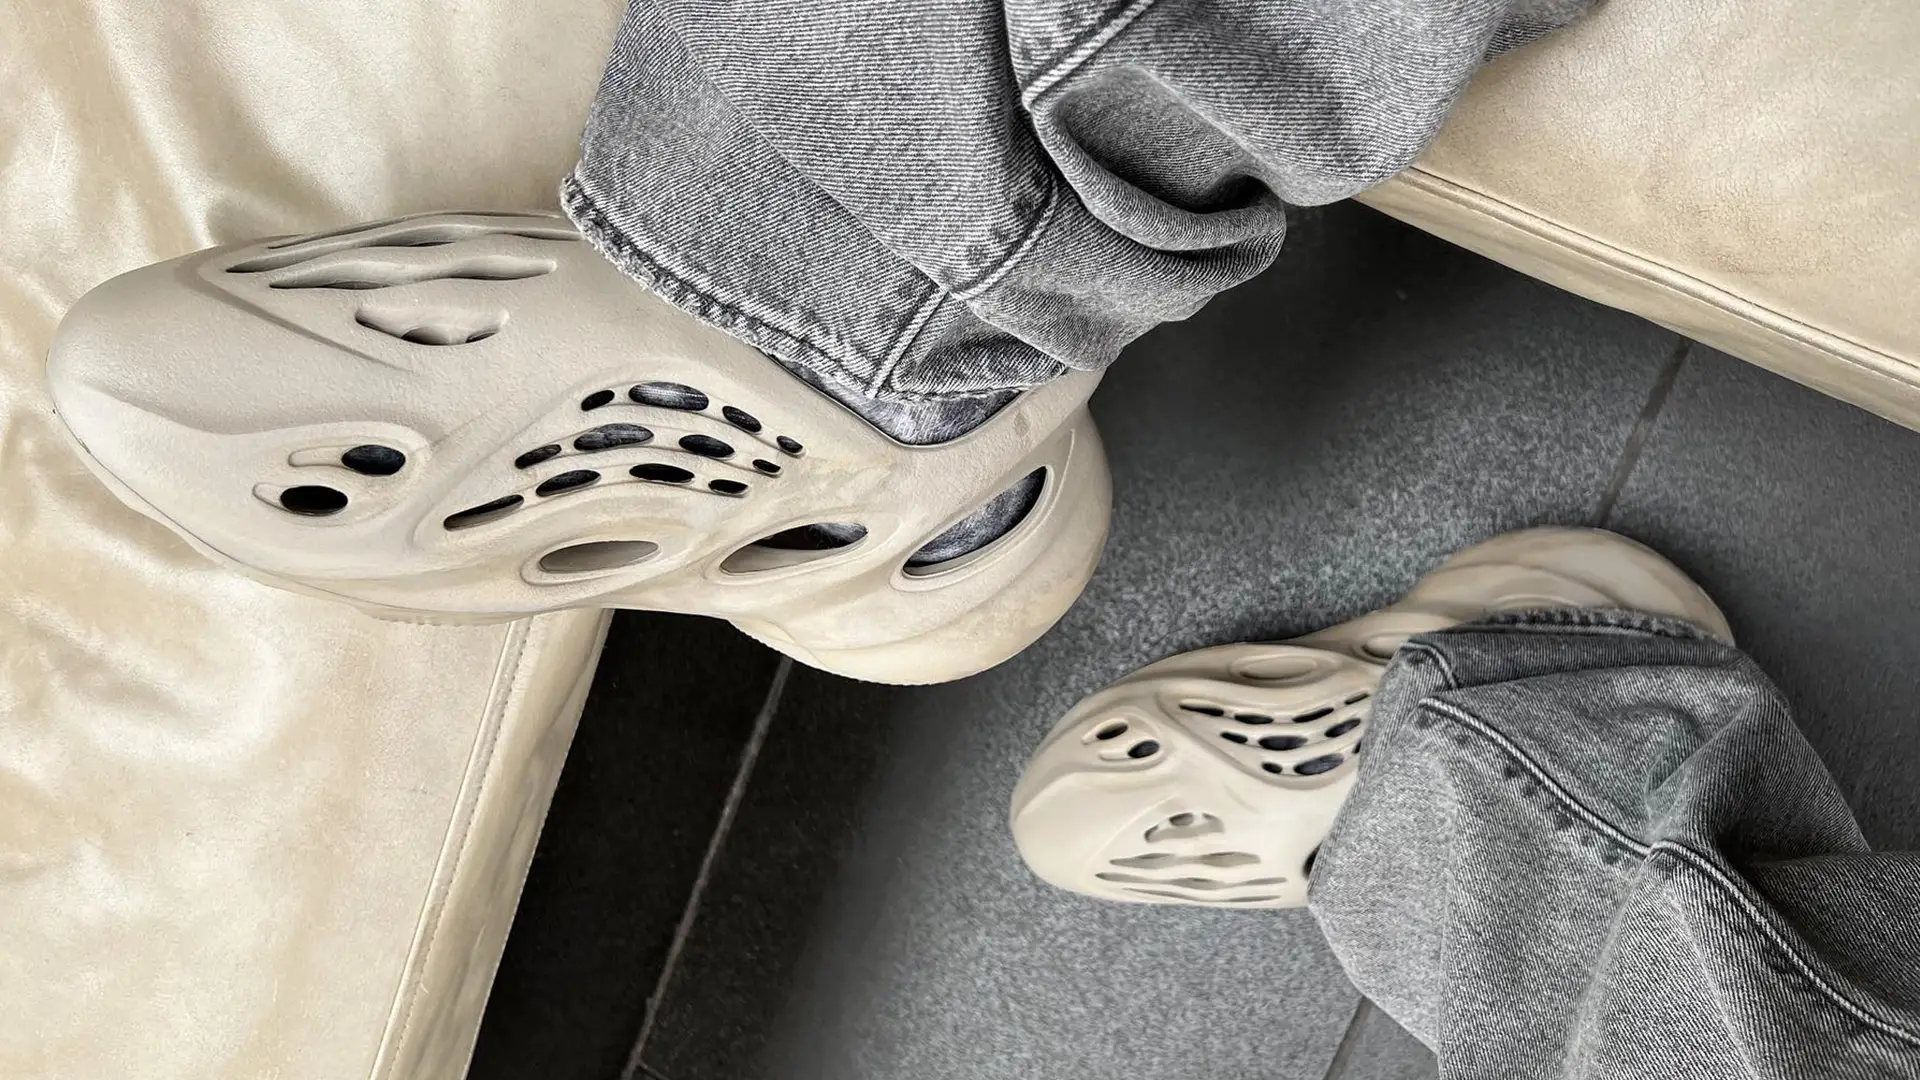 adidas patike na platformi online Sizing: How Do They Fit?